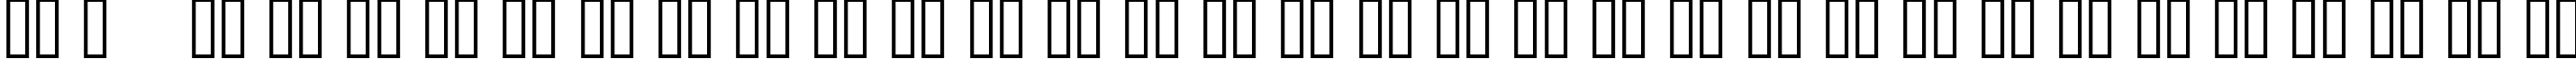 Пример написания русского алфавита шрифтом Feedback BB Italic